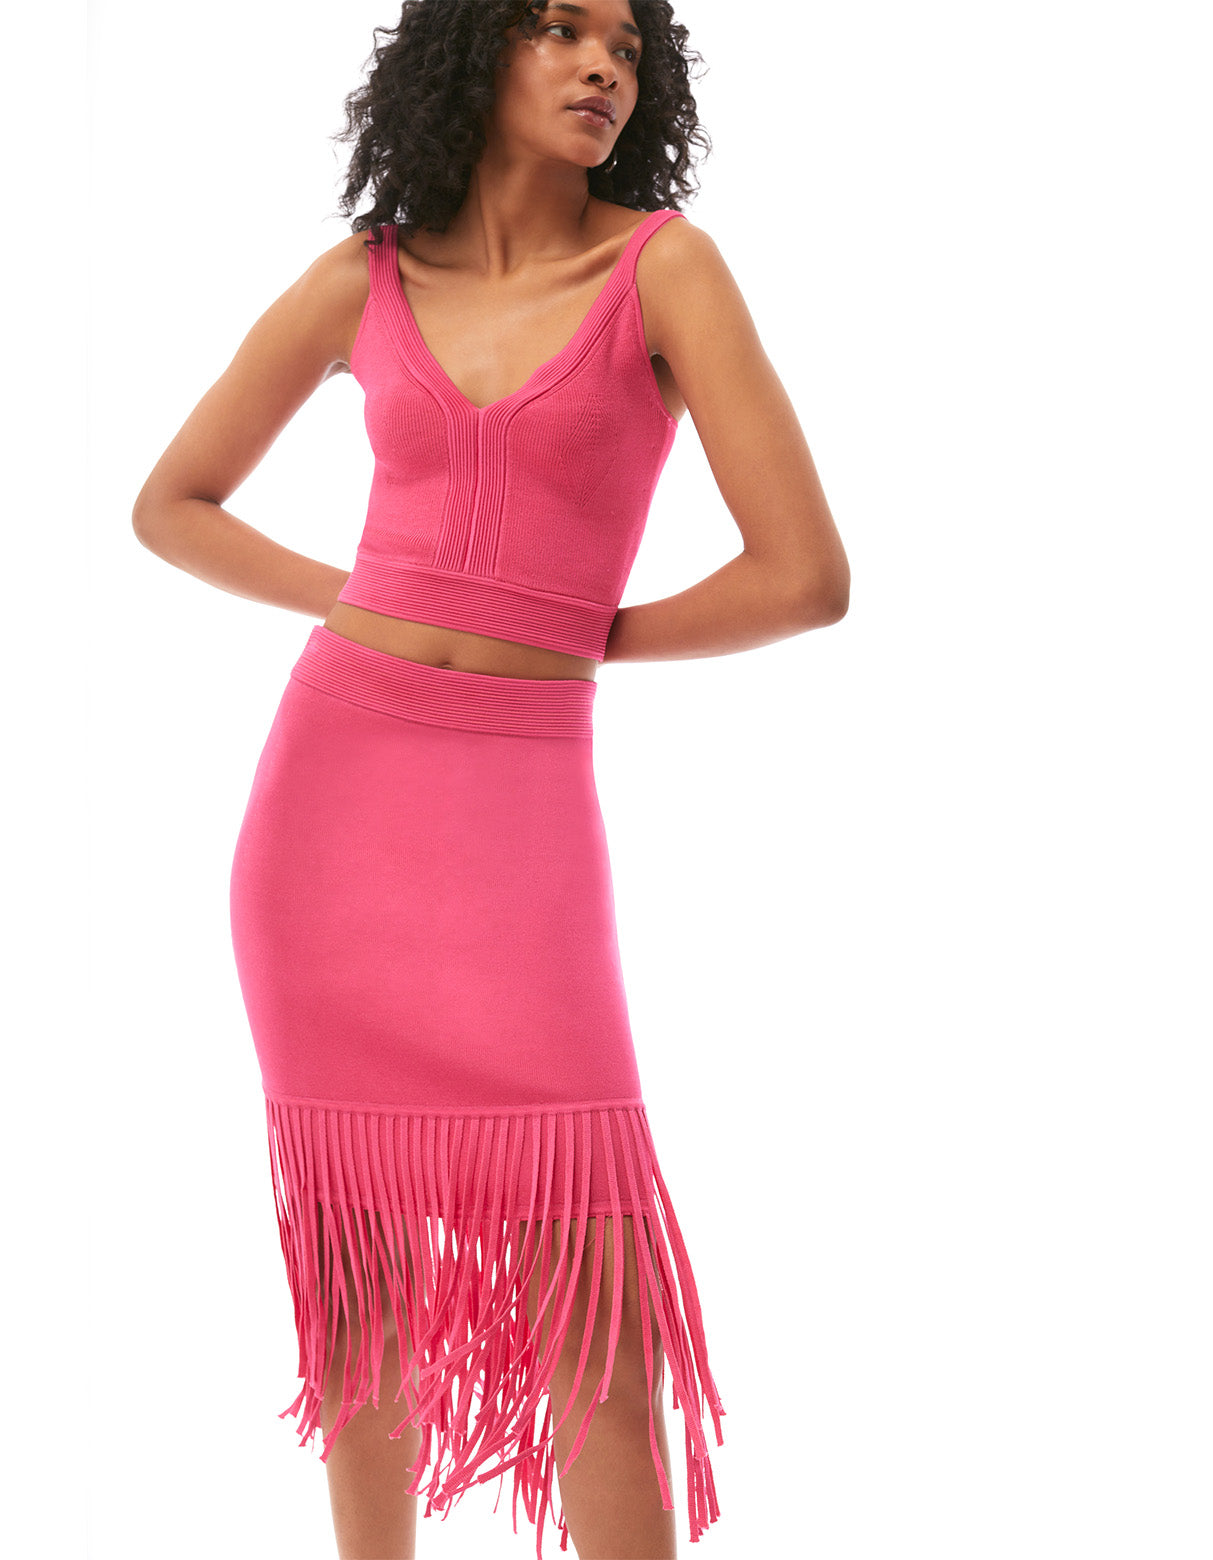 lorna fringe midi skirt hot pink - designer figure flattering cocktail party skirts for women